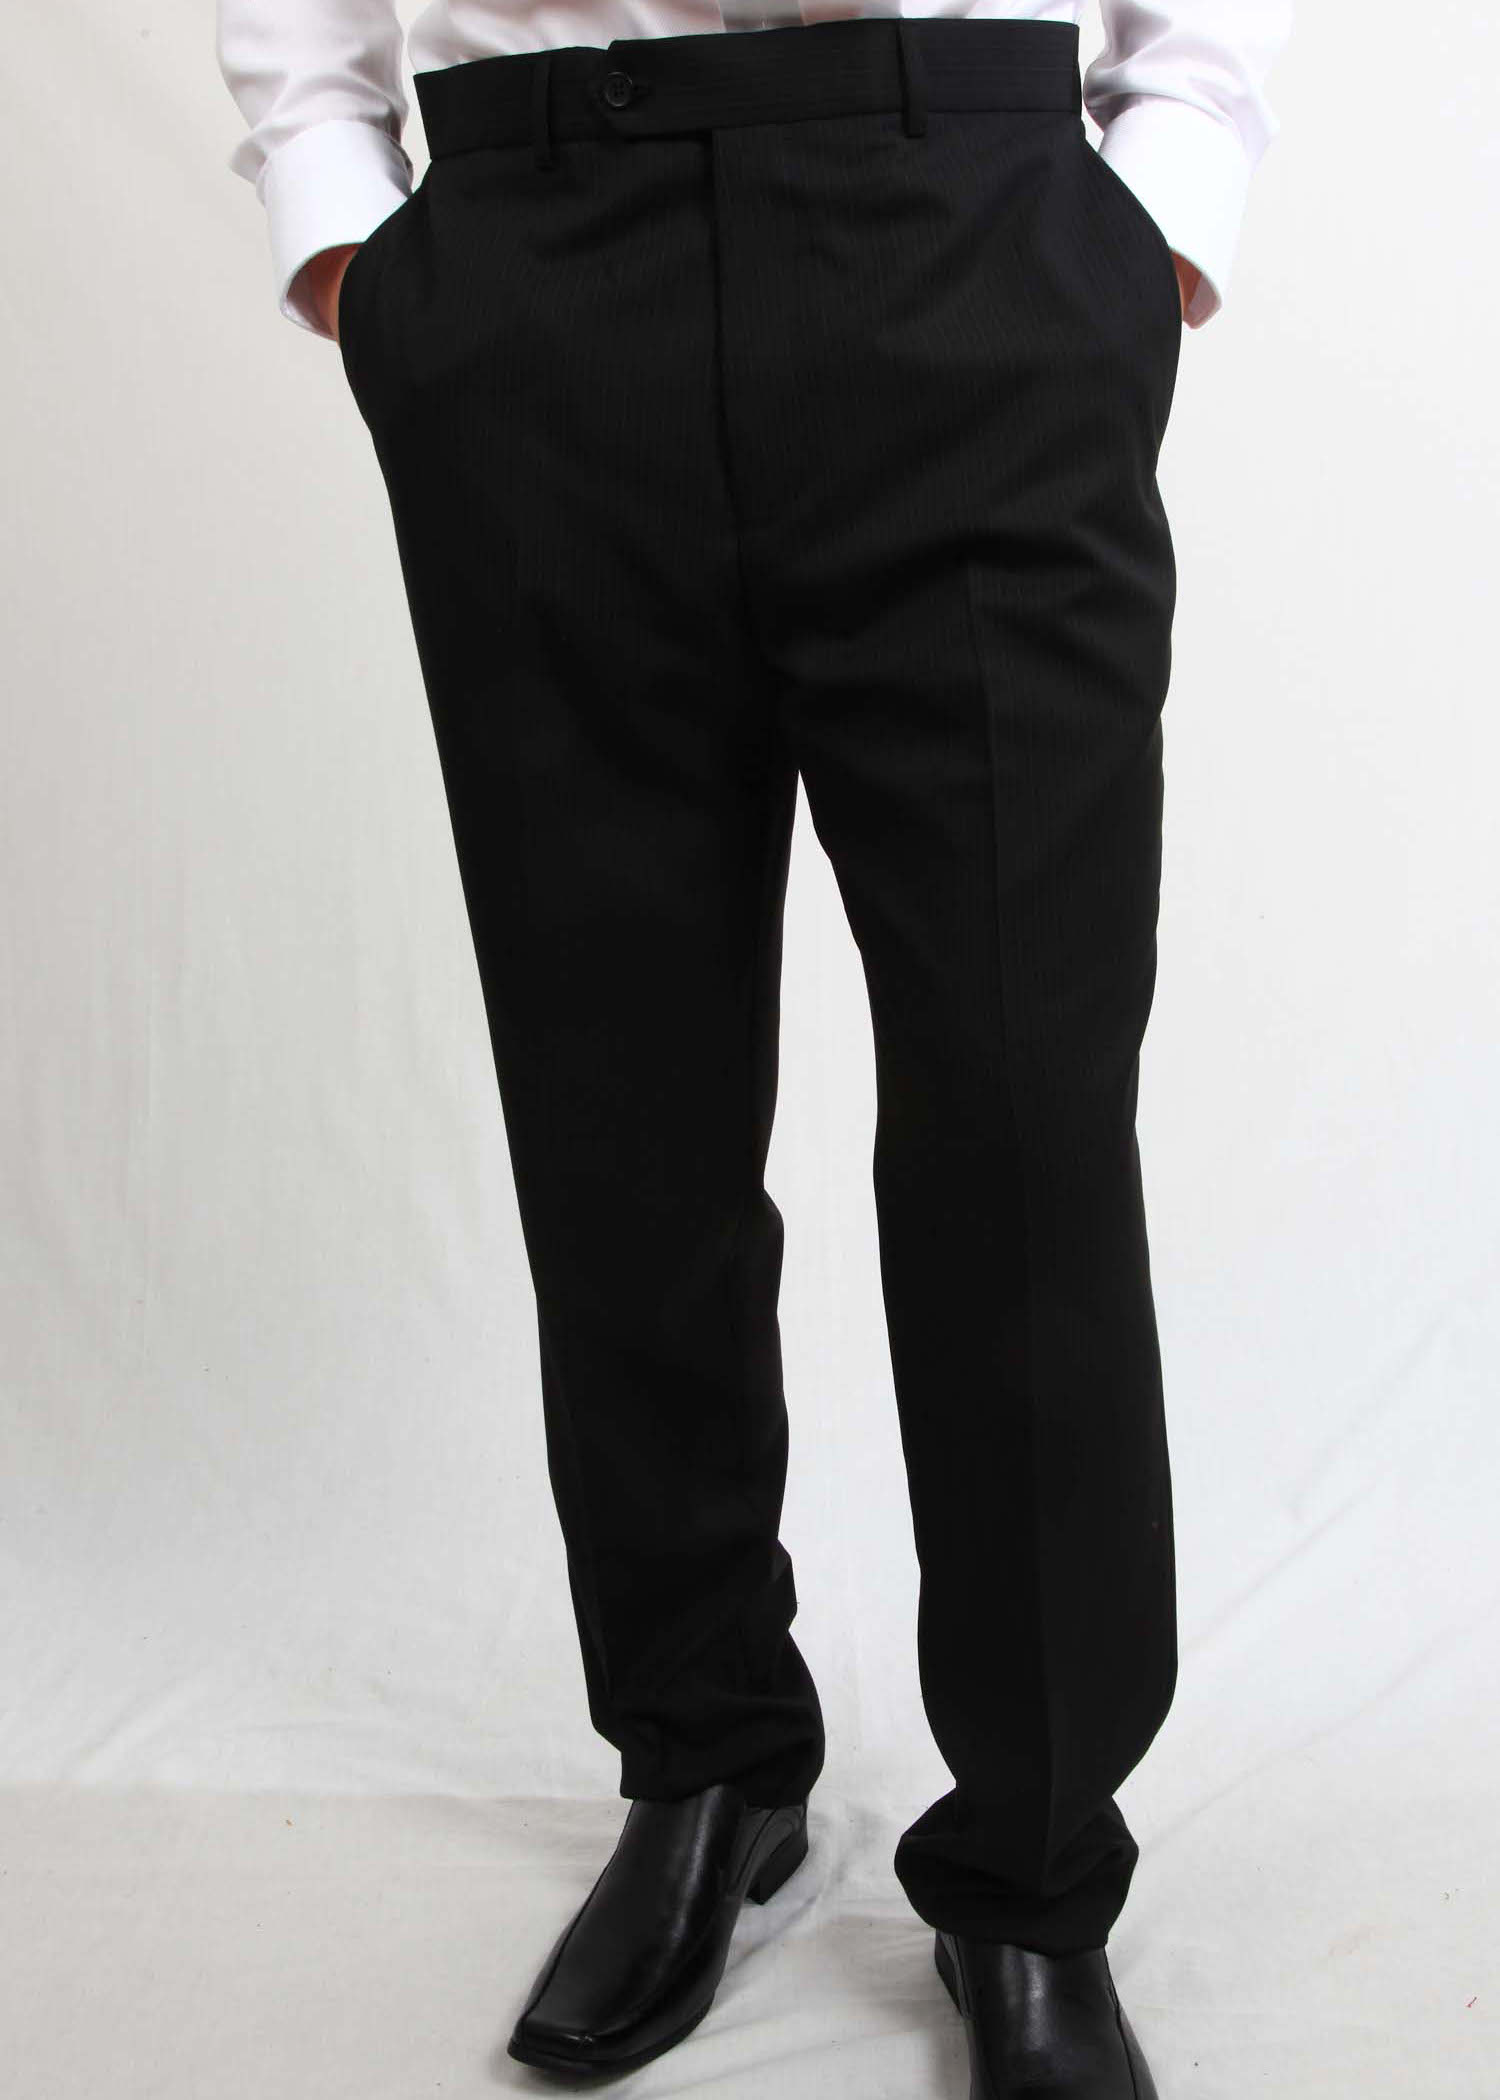 Bartoni Navy Pinstripe Suit - Tom Murphy's Formal and Menswear